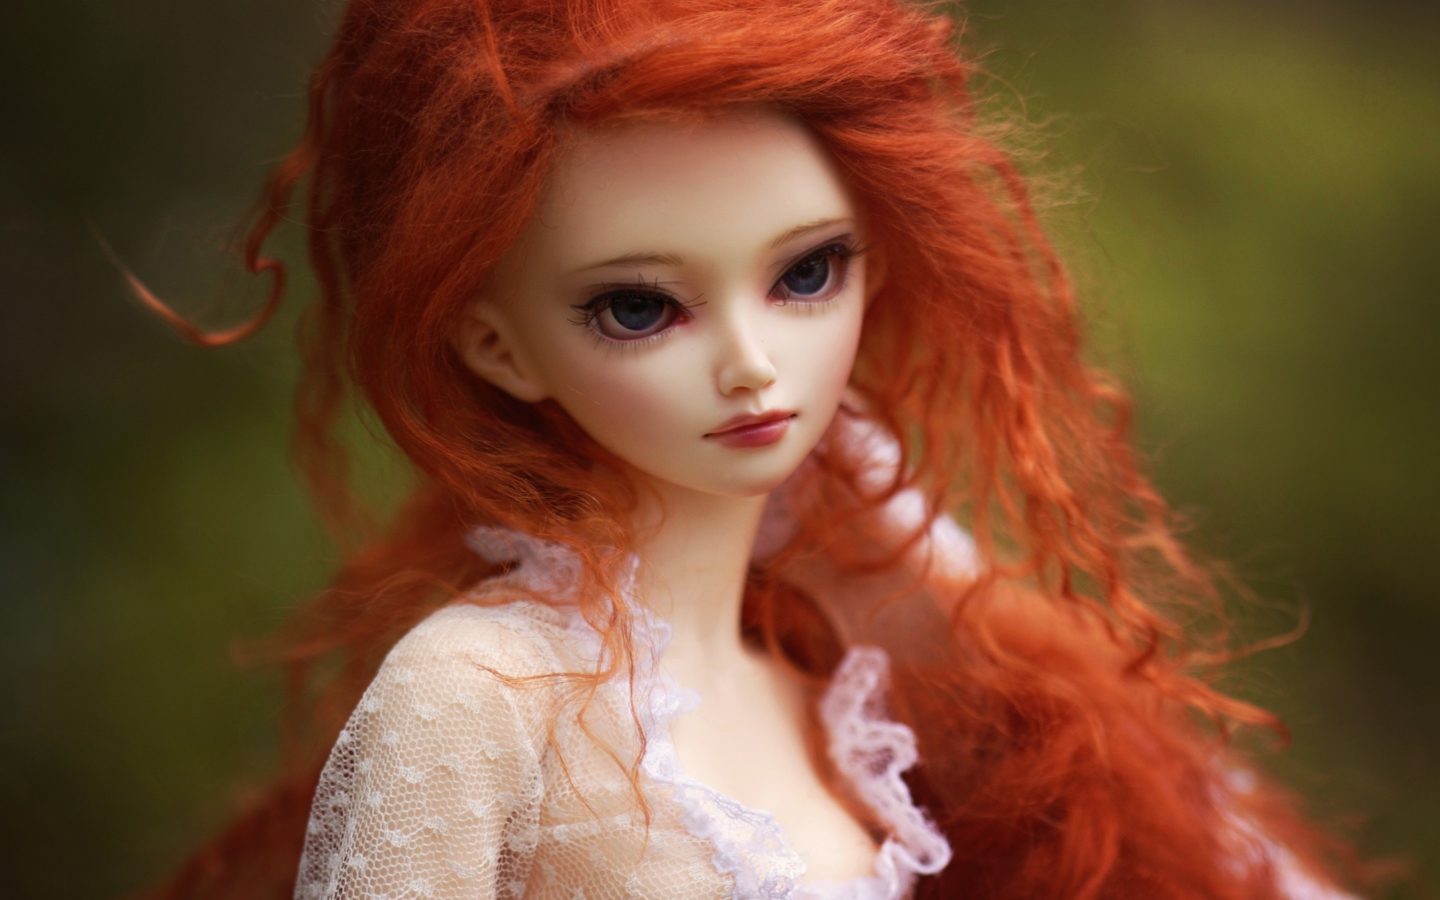 Gorgeous Redhead Doll With Sad Eyes wallpaper 1440x900